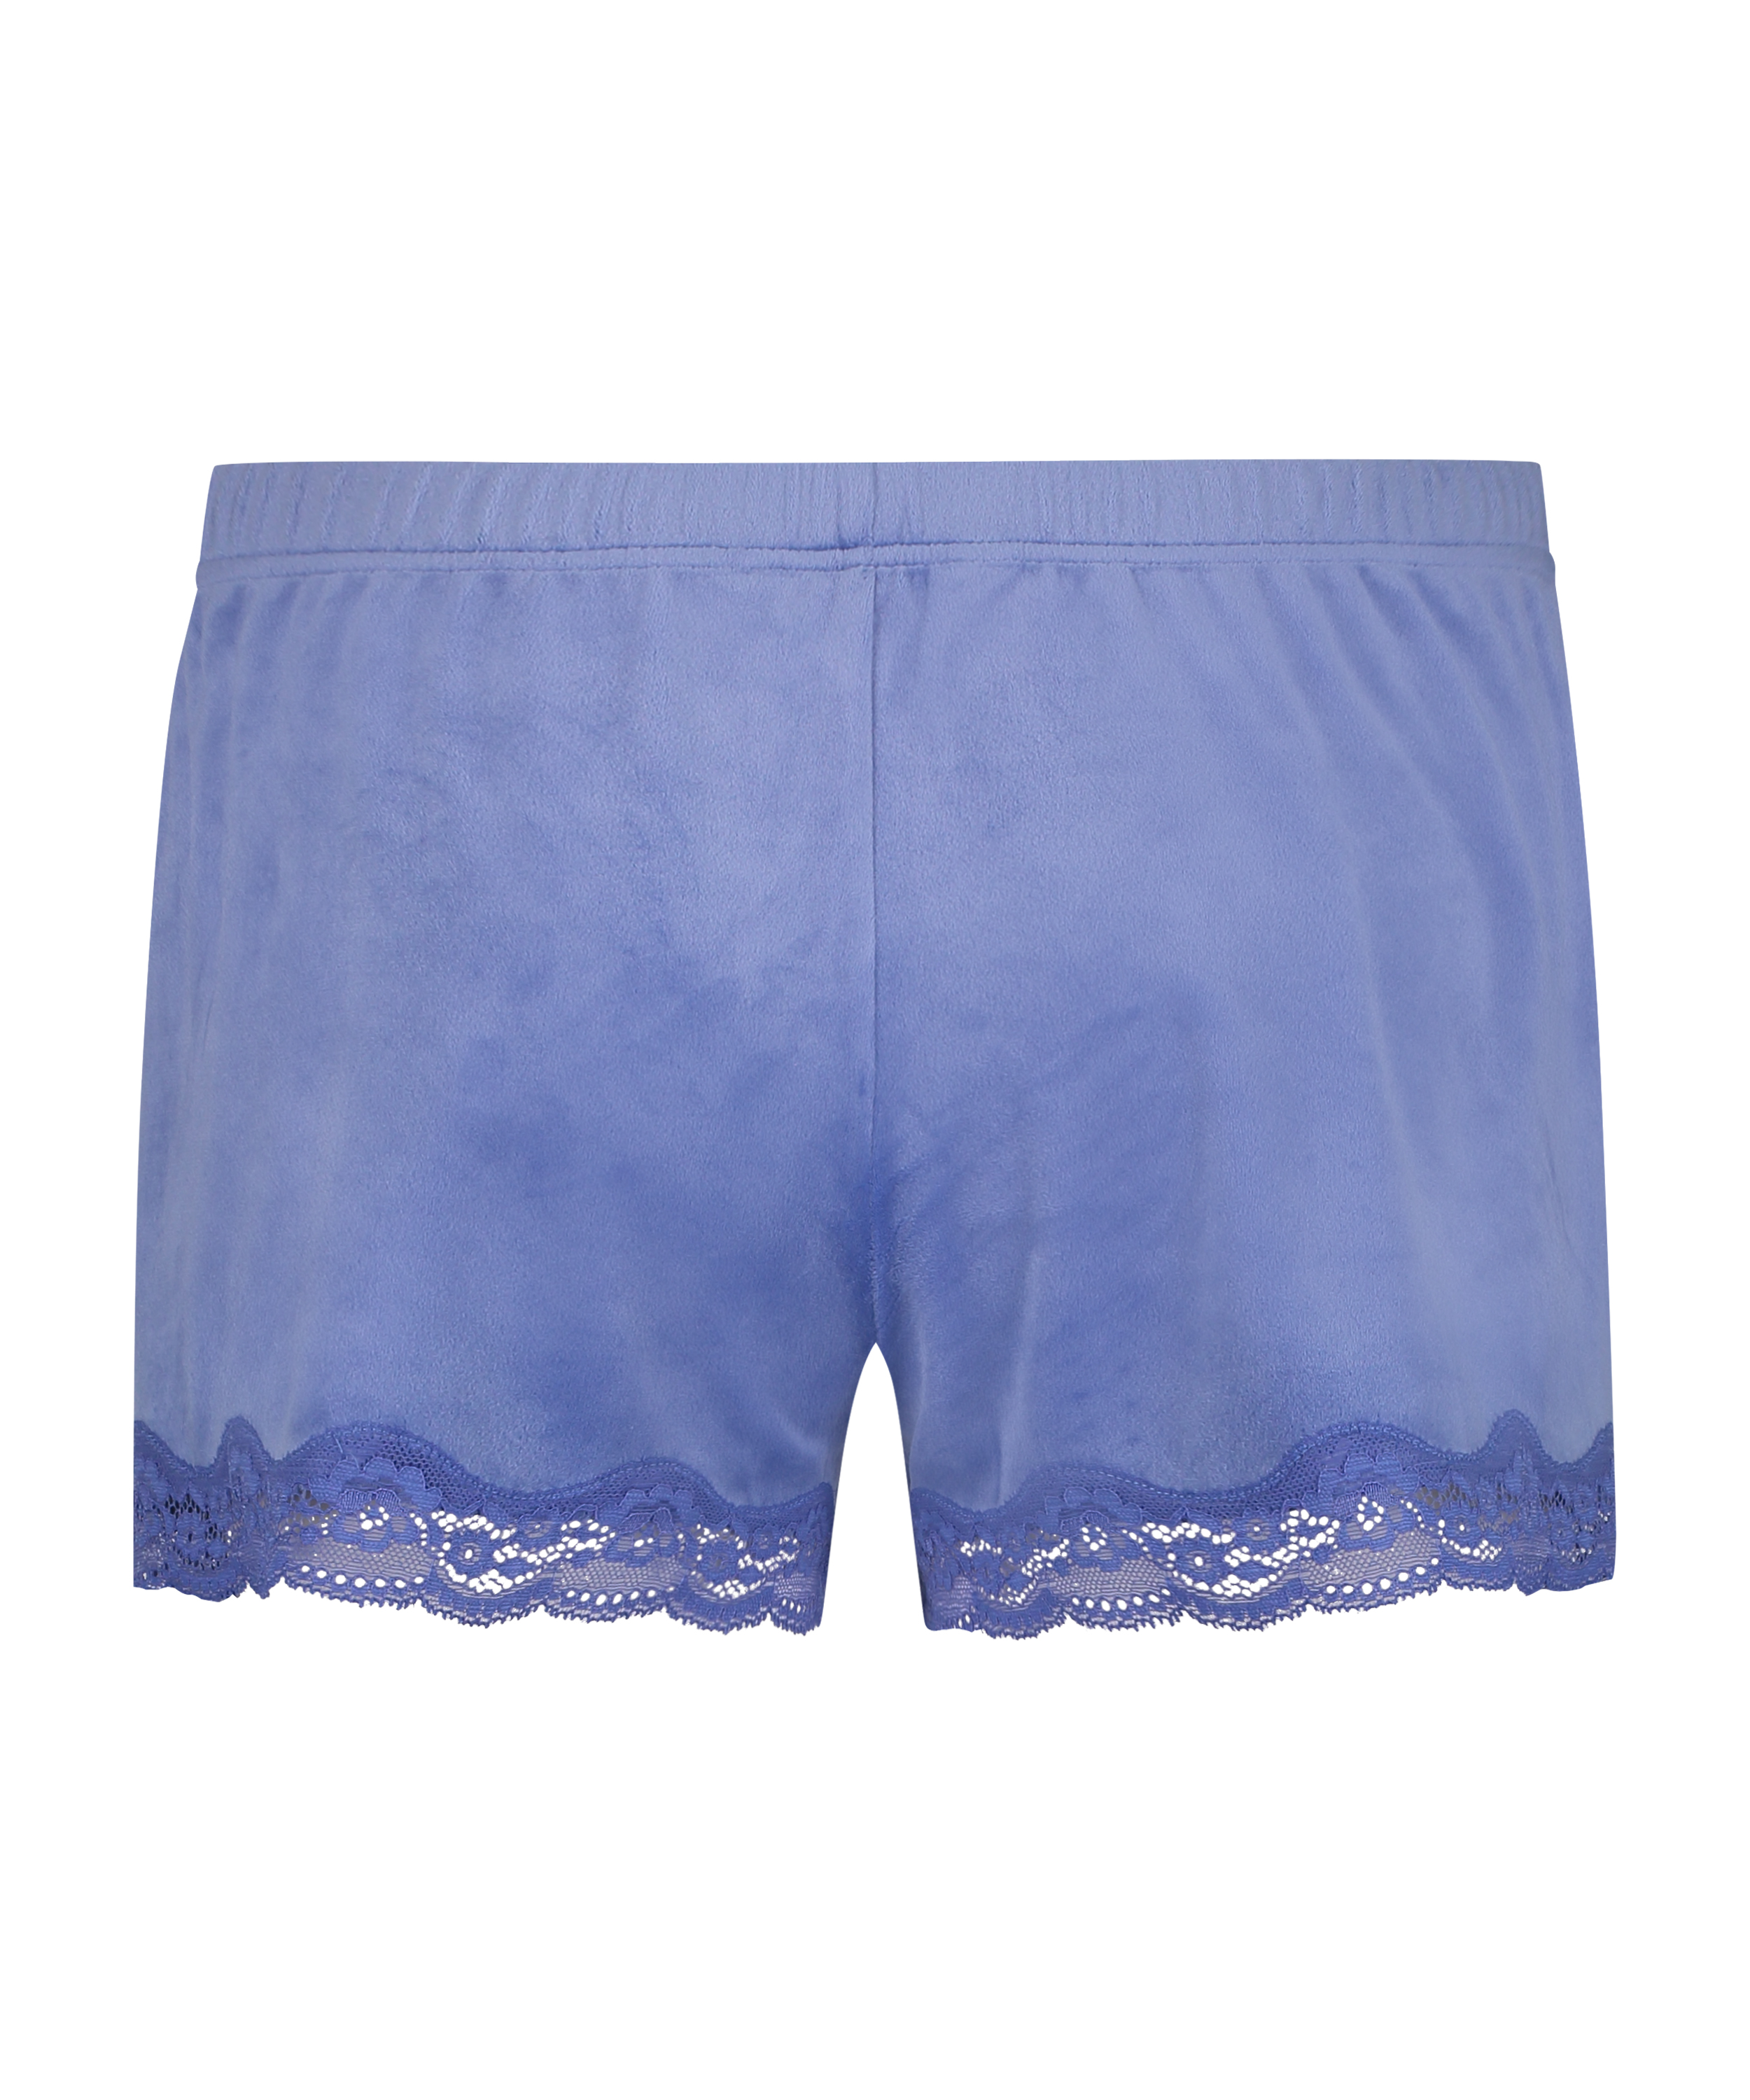 Velvet Lace Shorts For £24 Pyjama Bottoms Hunkemöller